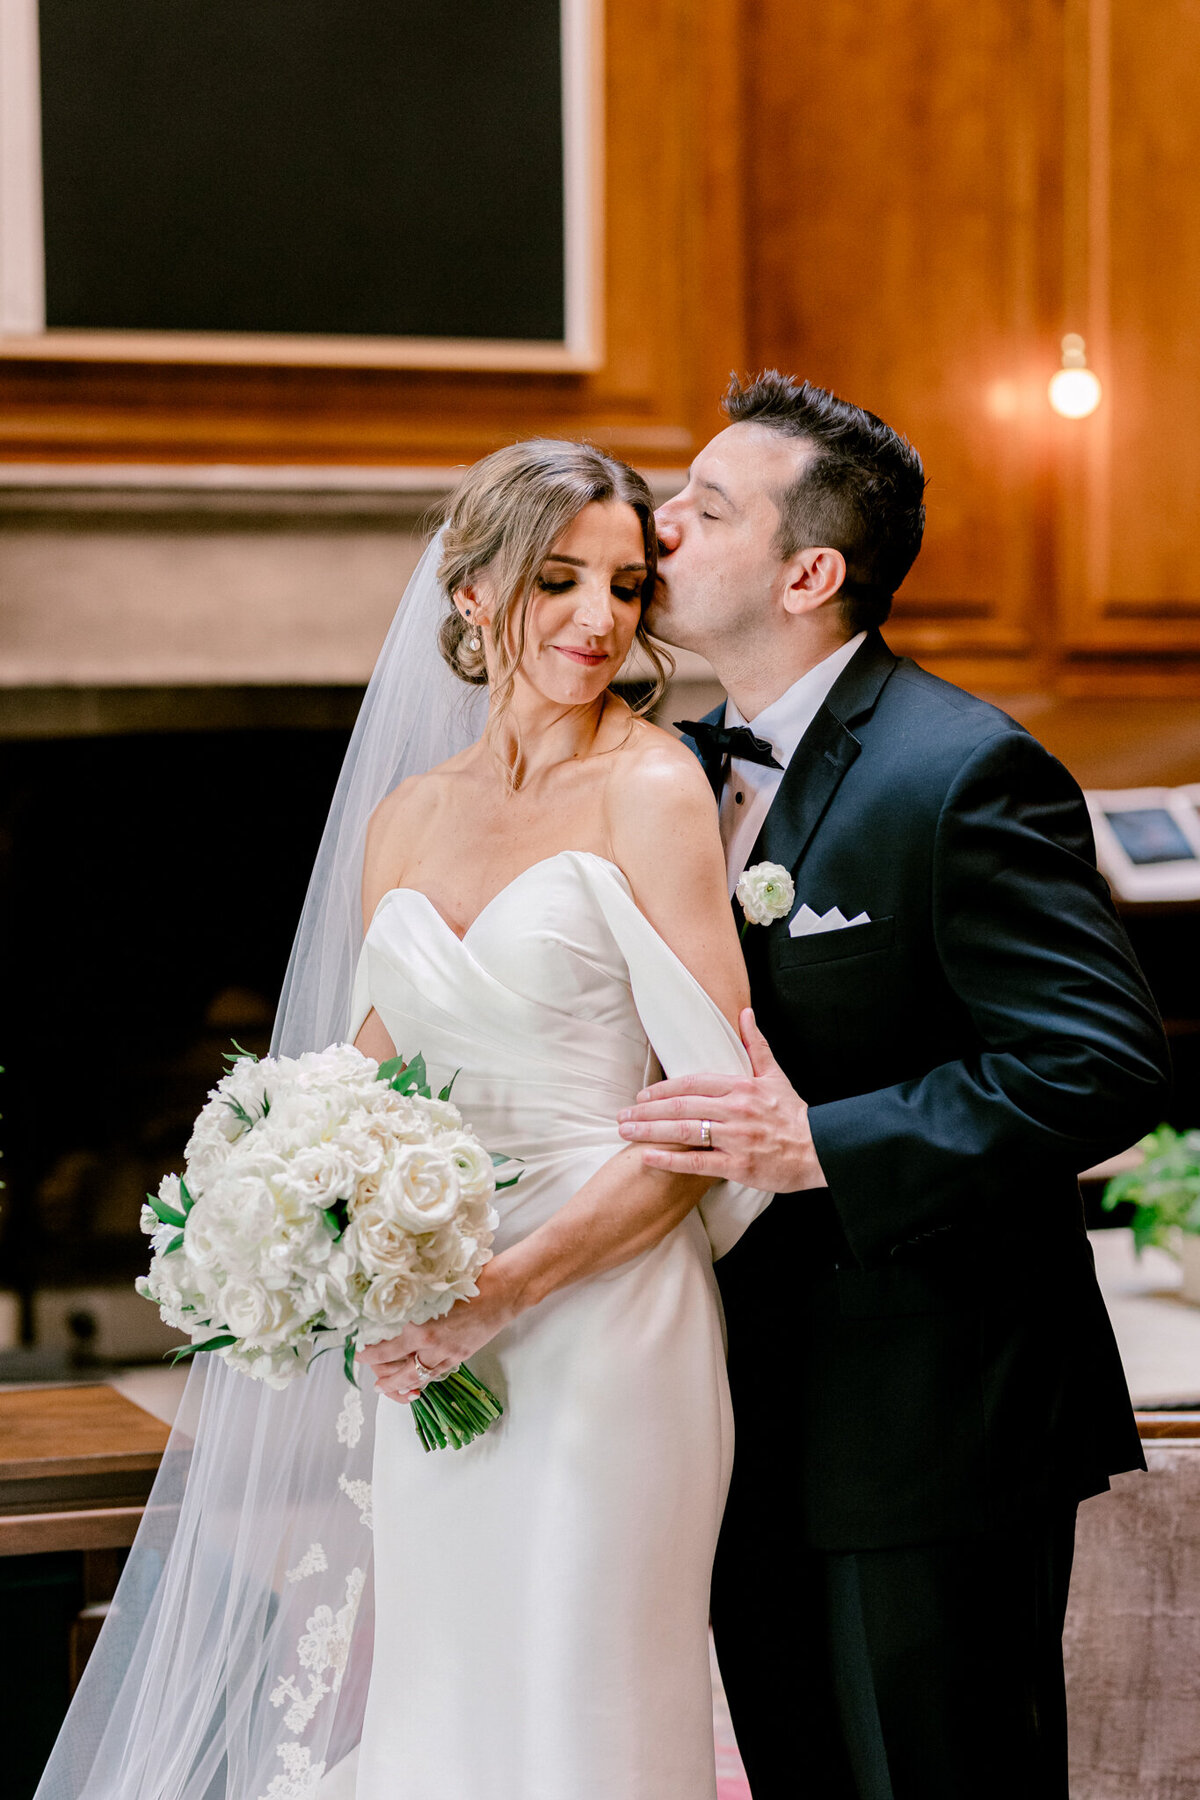 Virginia & Michael's Wedding at the Adolphus Hotel | Dallas Wedding Photographer | Sami Kathryn Photography-131